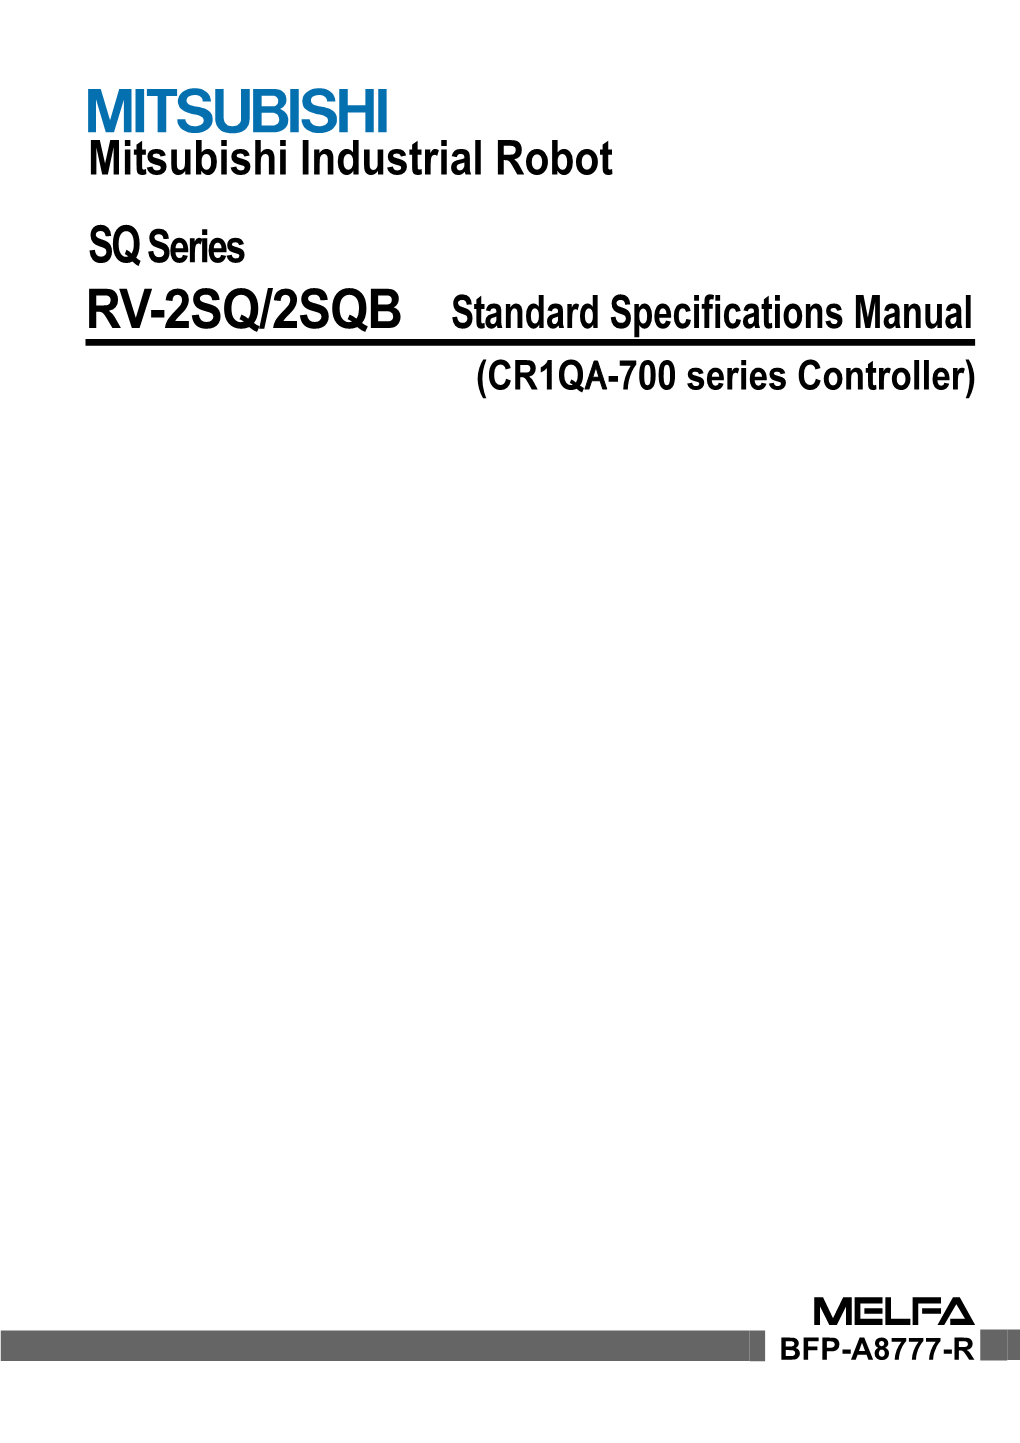 RV-2SQ/2SQB Standard Specifications Manual (CR1QA-700 Series Controller)